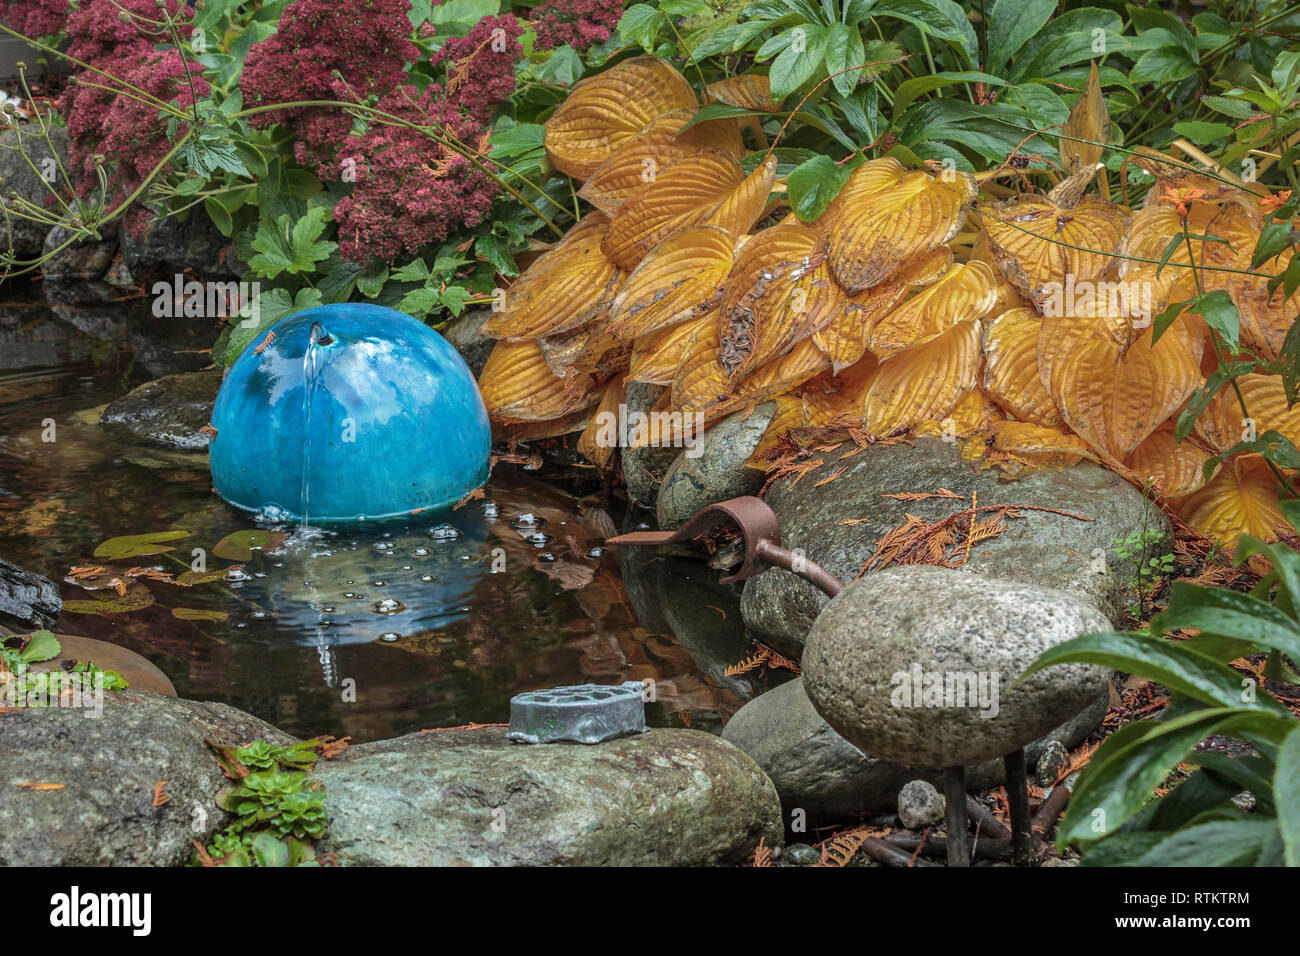 Smooth rocks and dense foliage, including bright orange hostas, surround a tiny garden pond which has a round, blue ceramic water bubbler (autumn). Stock Photo